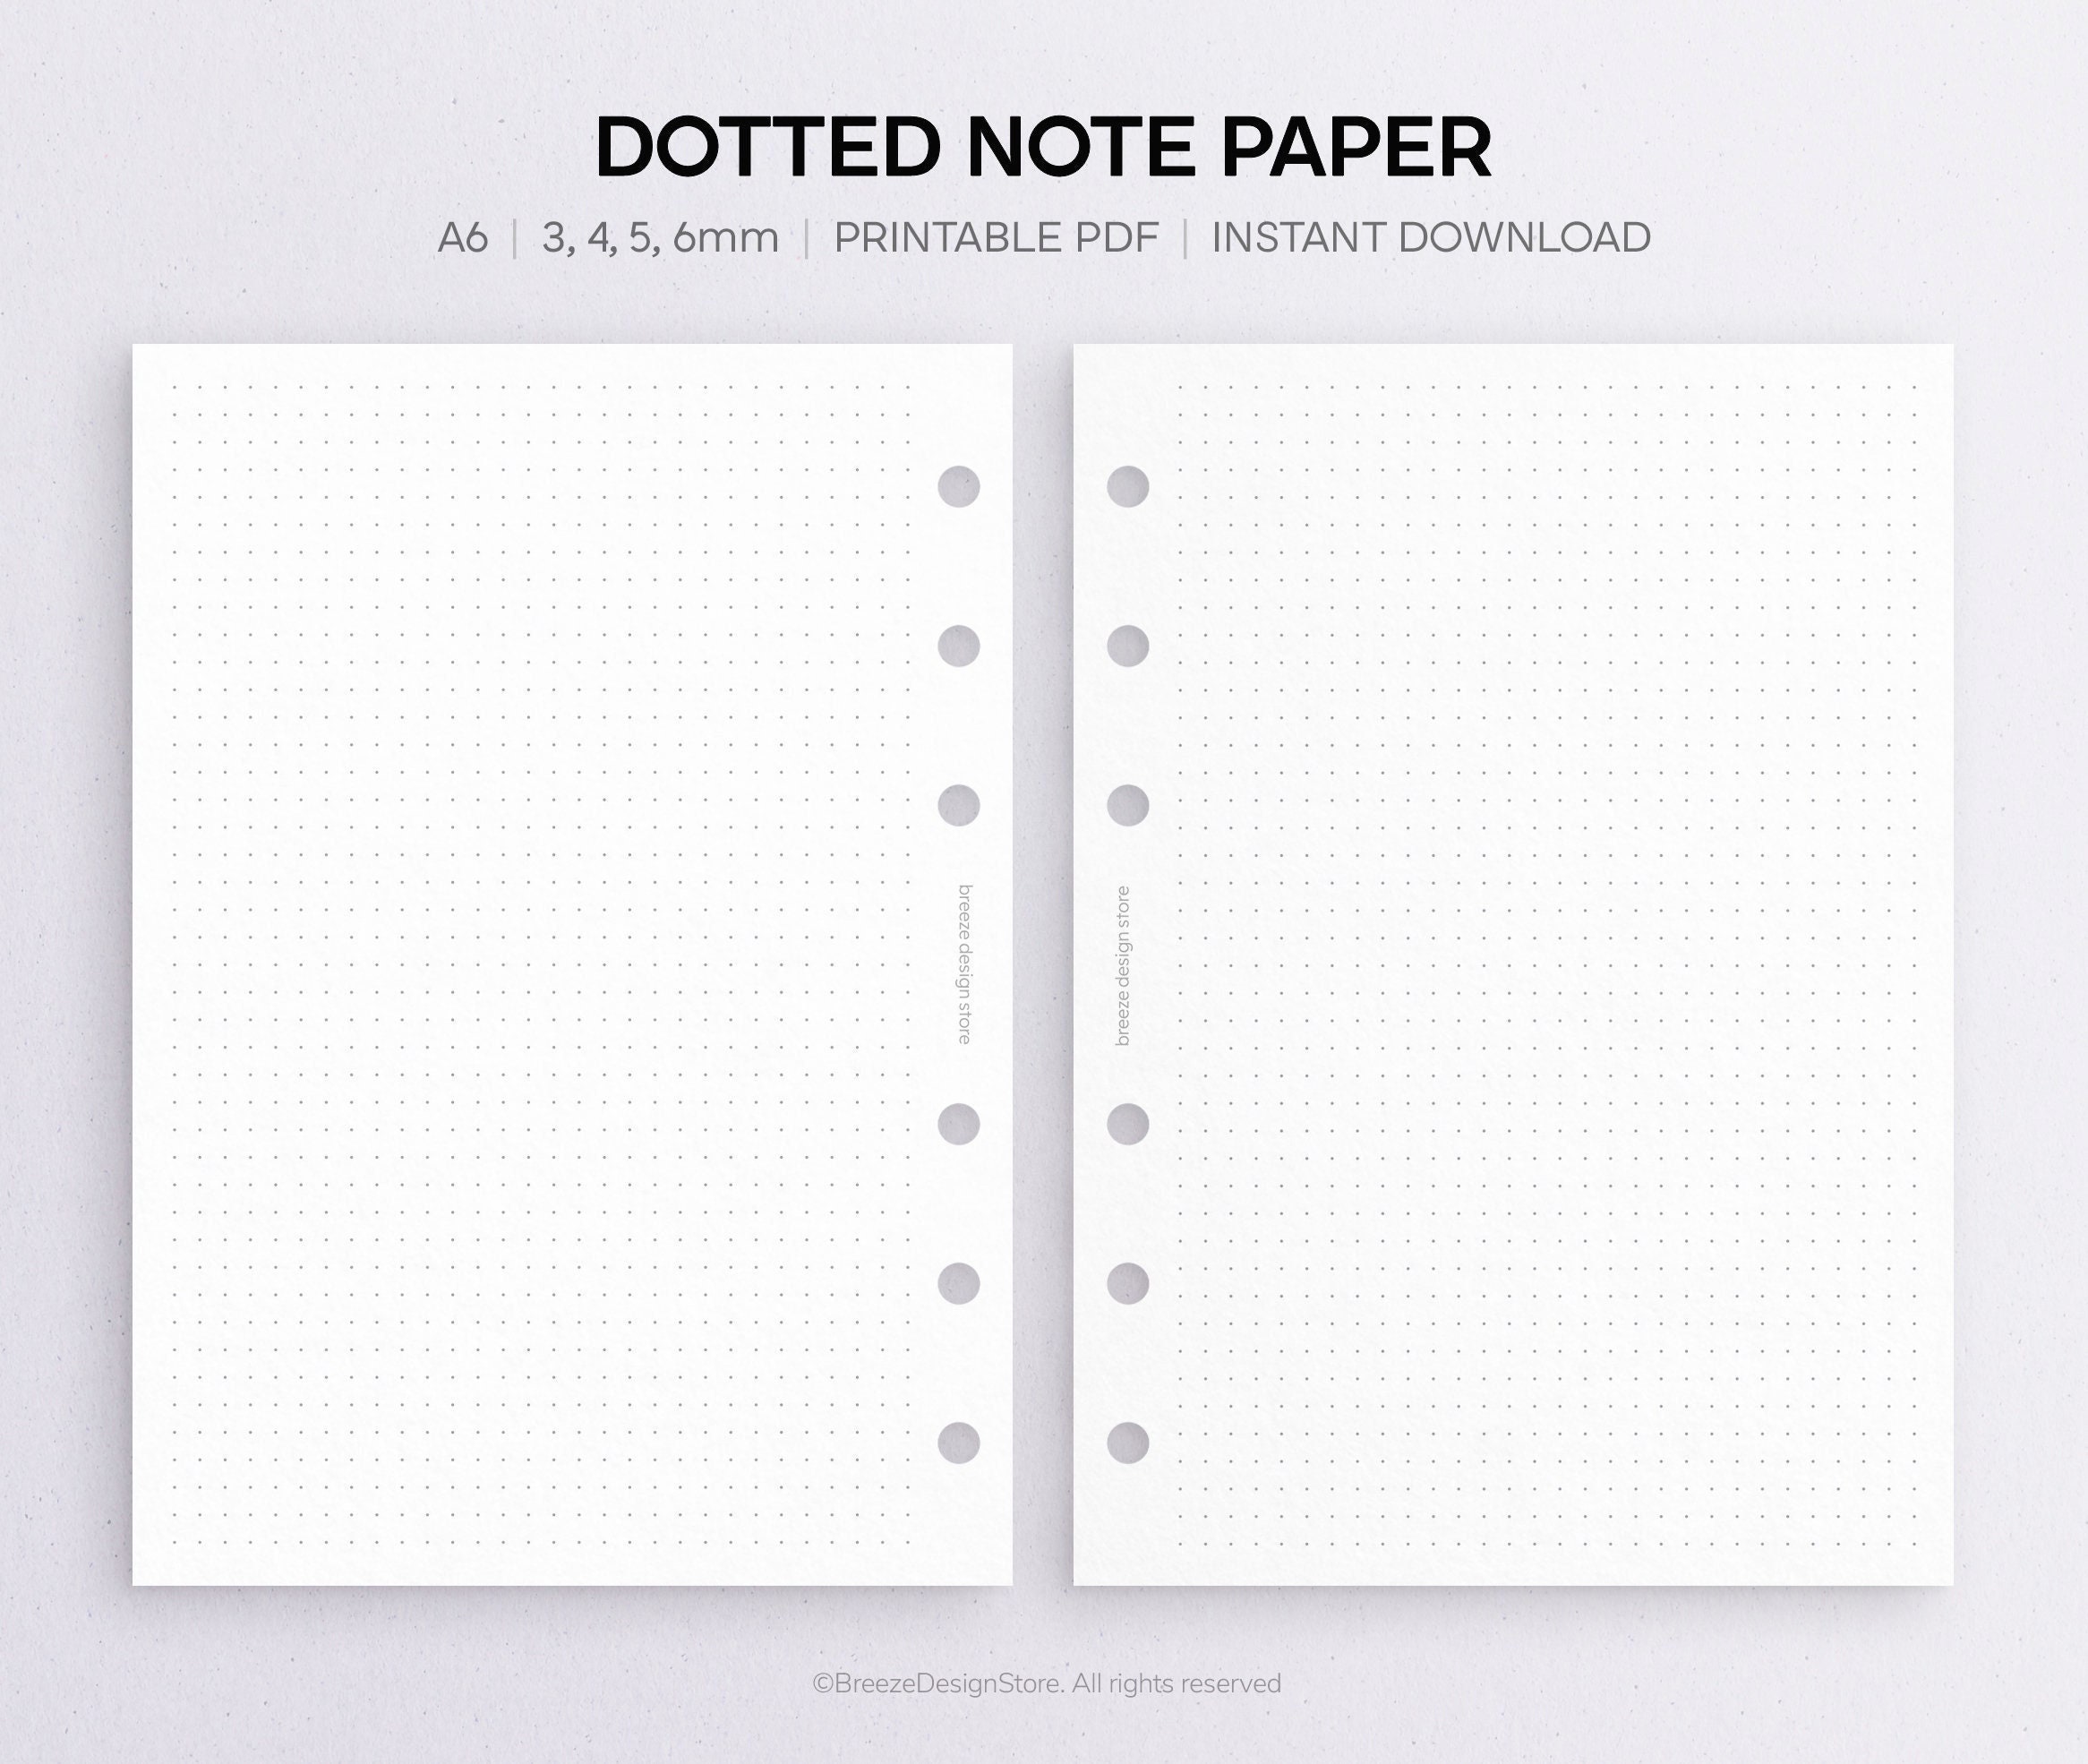 Grid or Dot Paper A5 6 Ring Binder Refills 